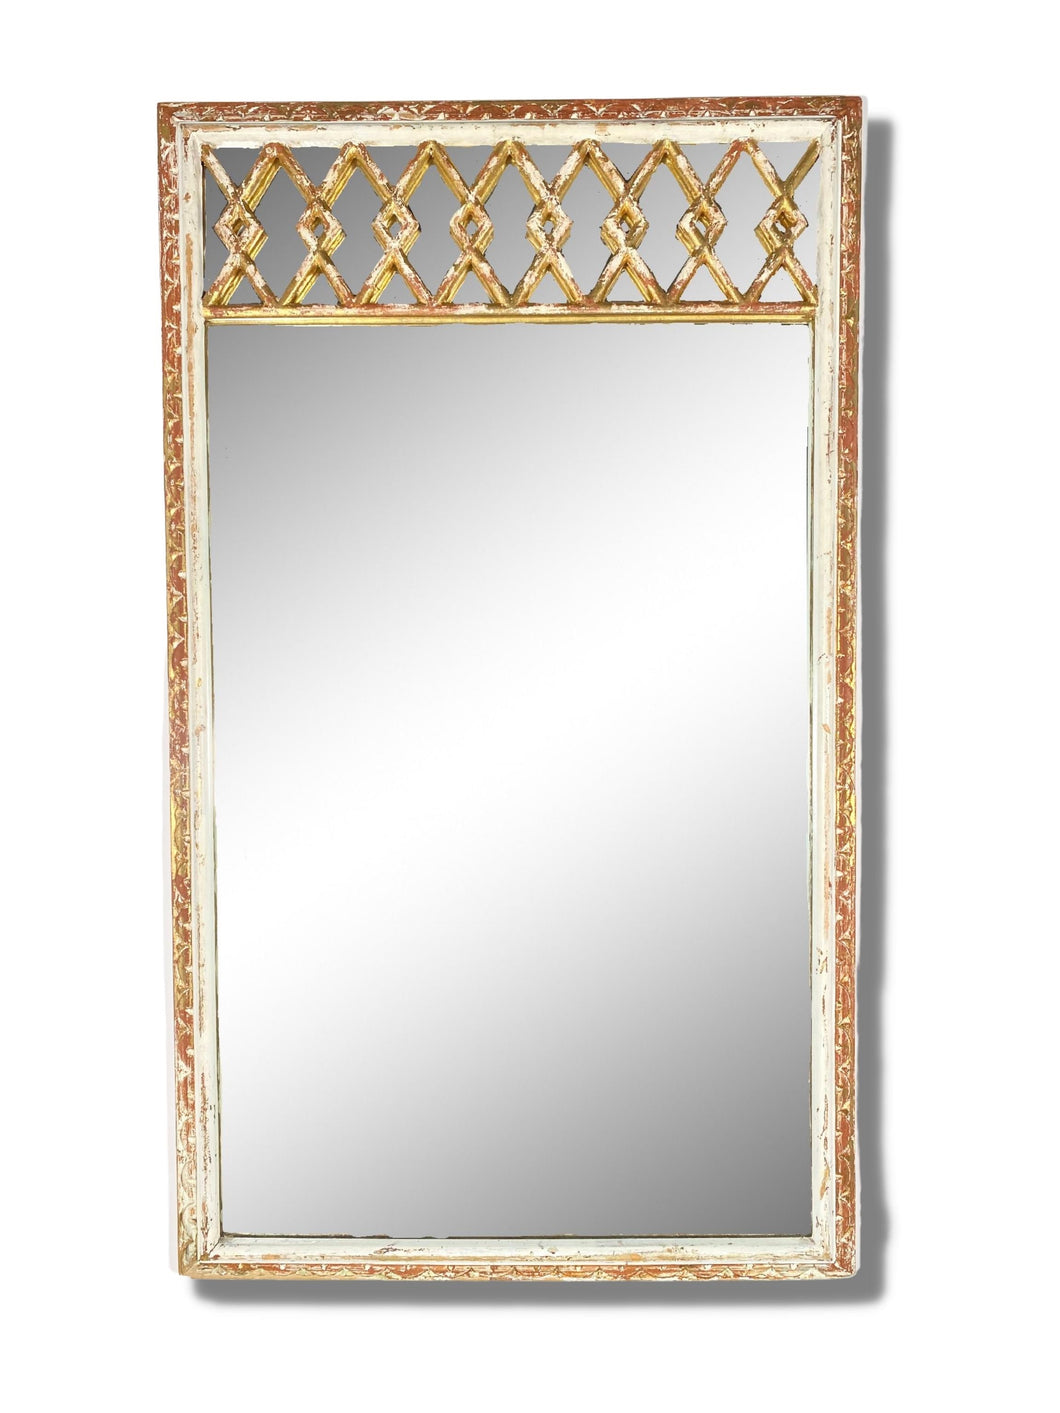 Lattice Trumeau Mirror